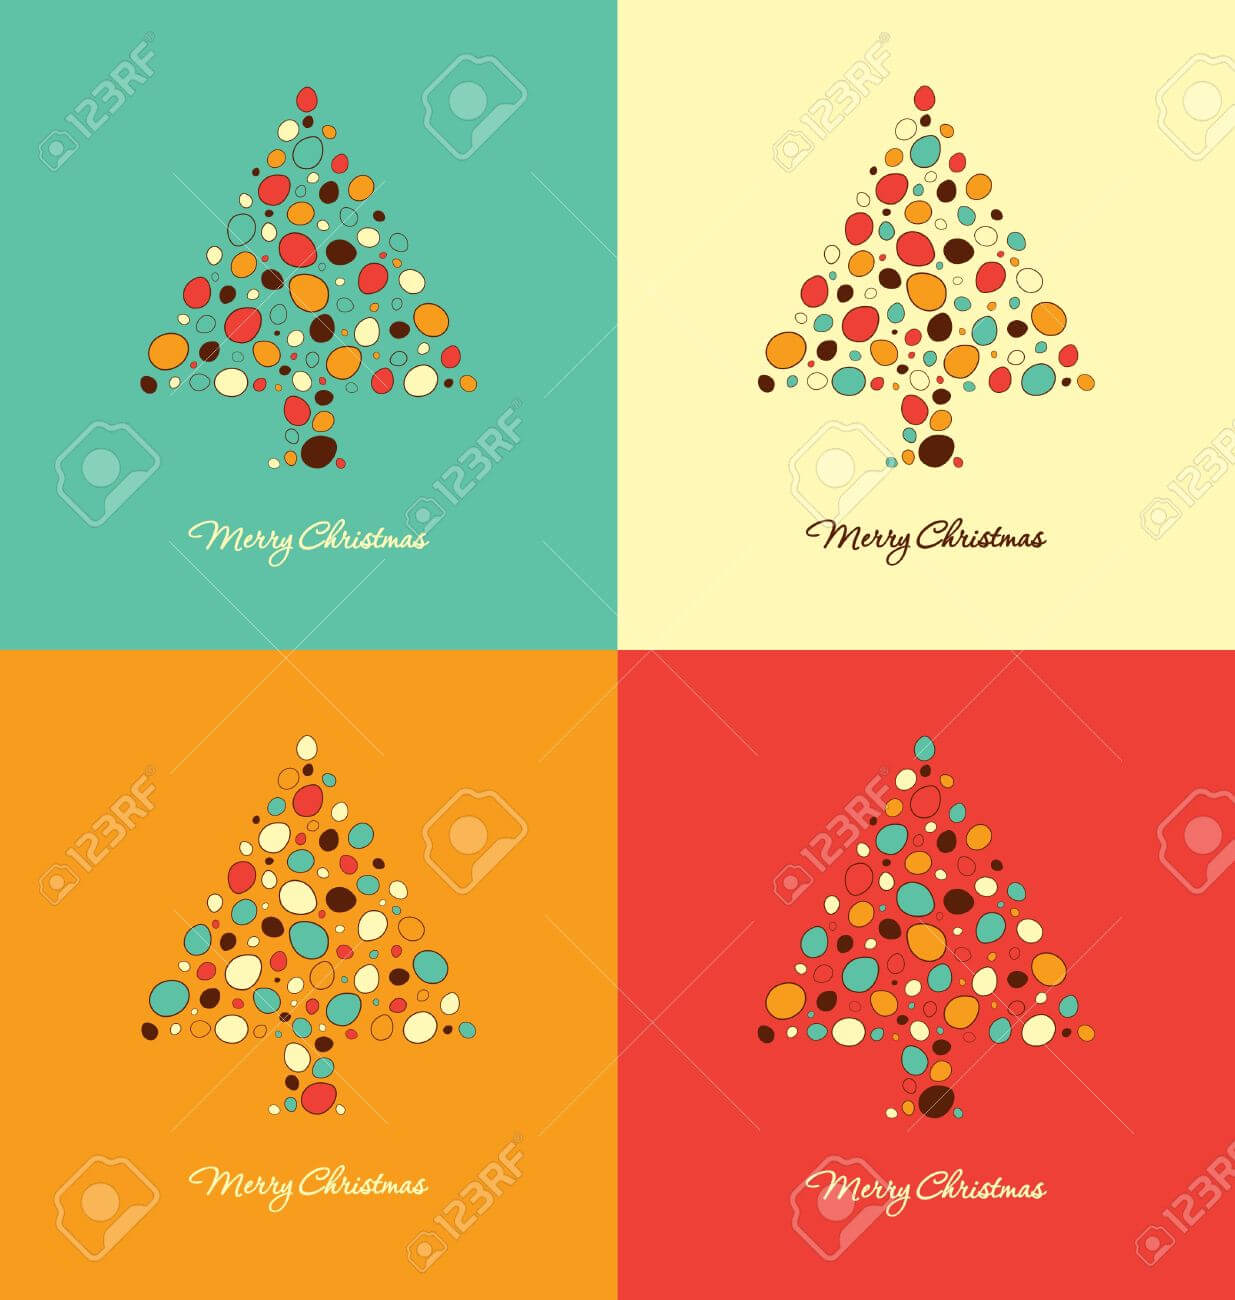 042 Christmas Card Design Templates Template Ideas Unusual Regarding Blank Christmas Card Templates Free